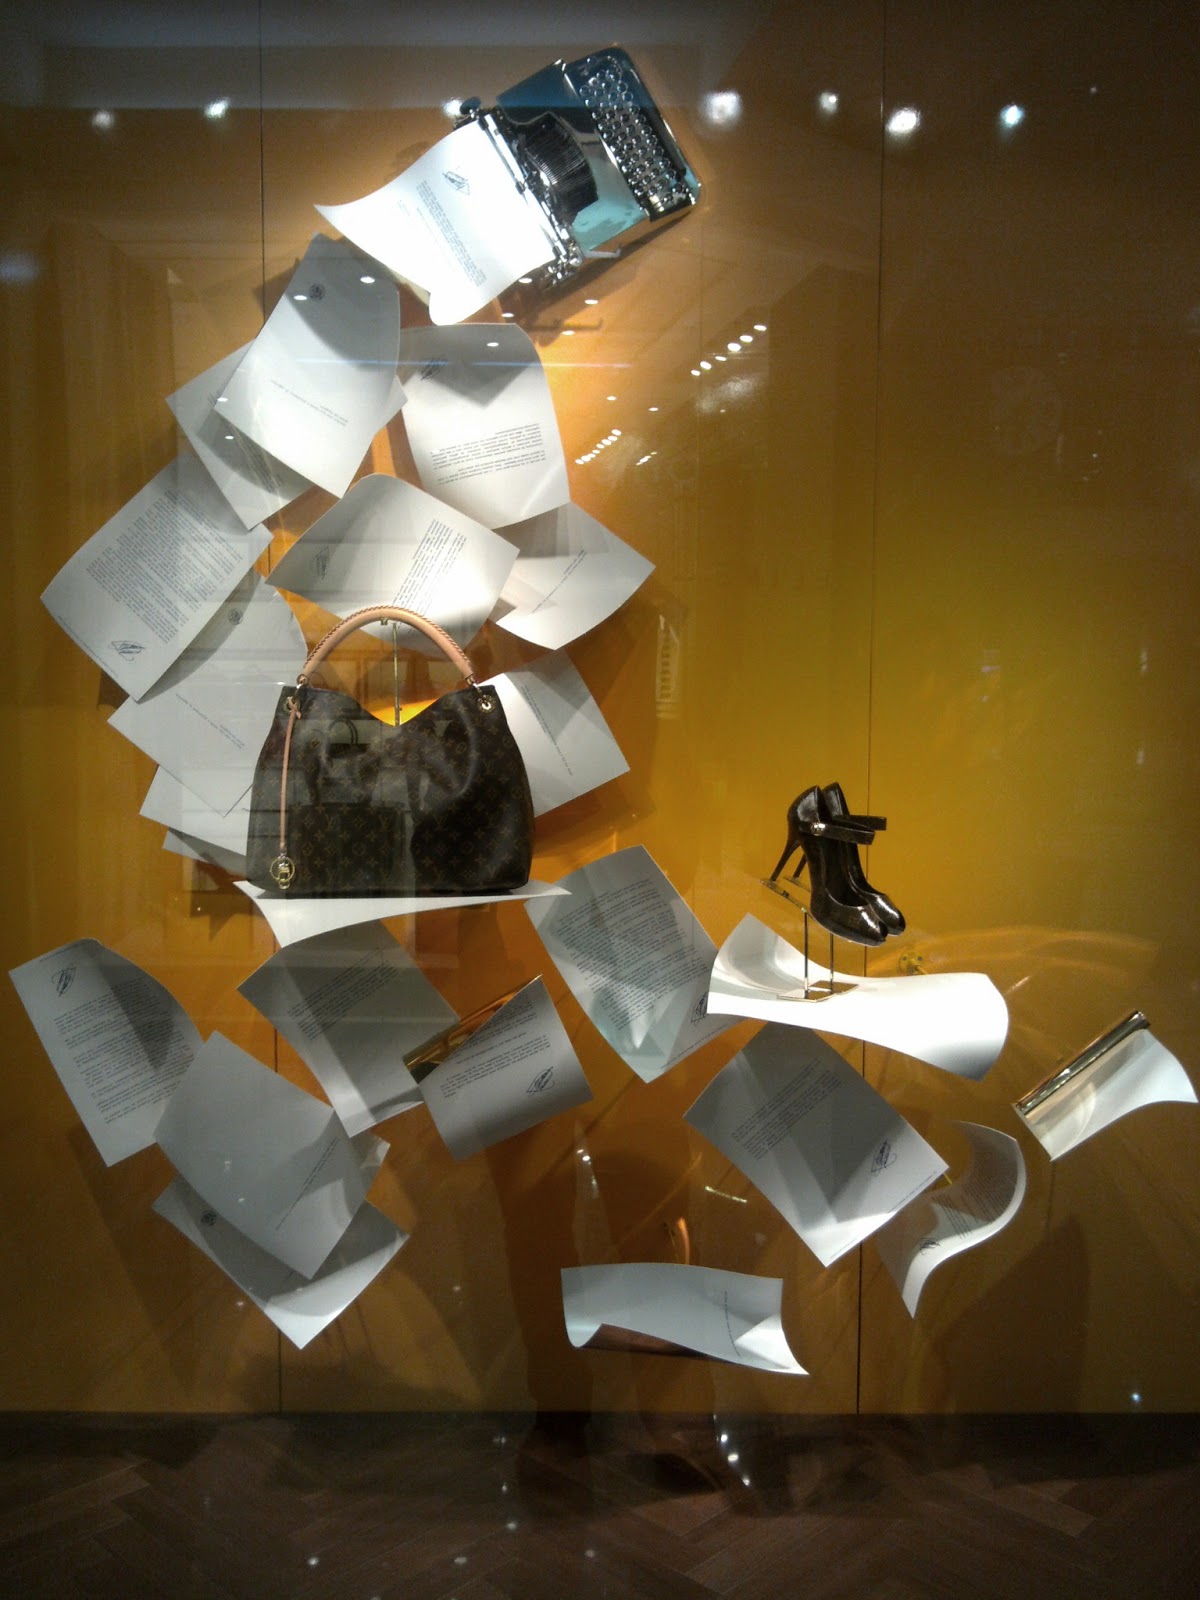 Louis Vuitton Floating Papers Window Display - Best Window Displays